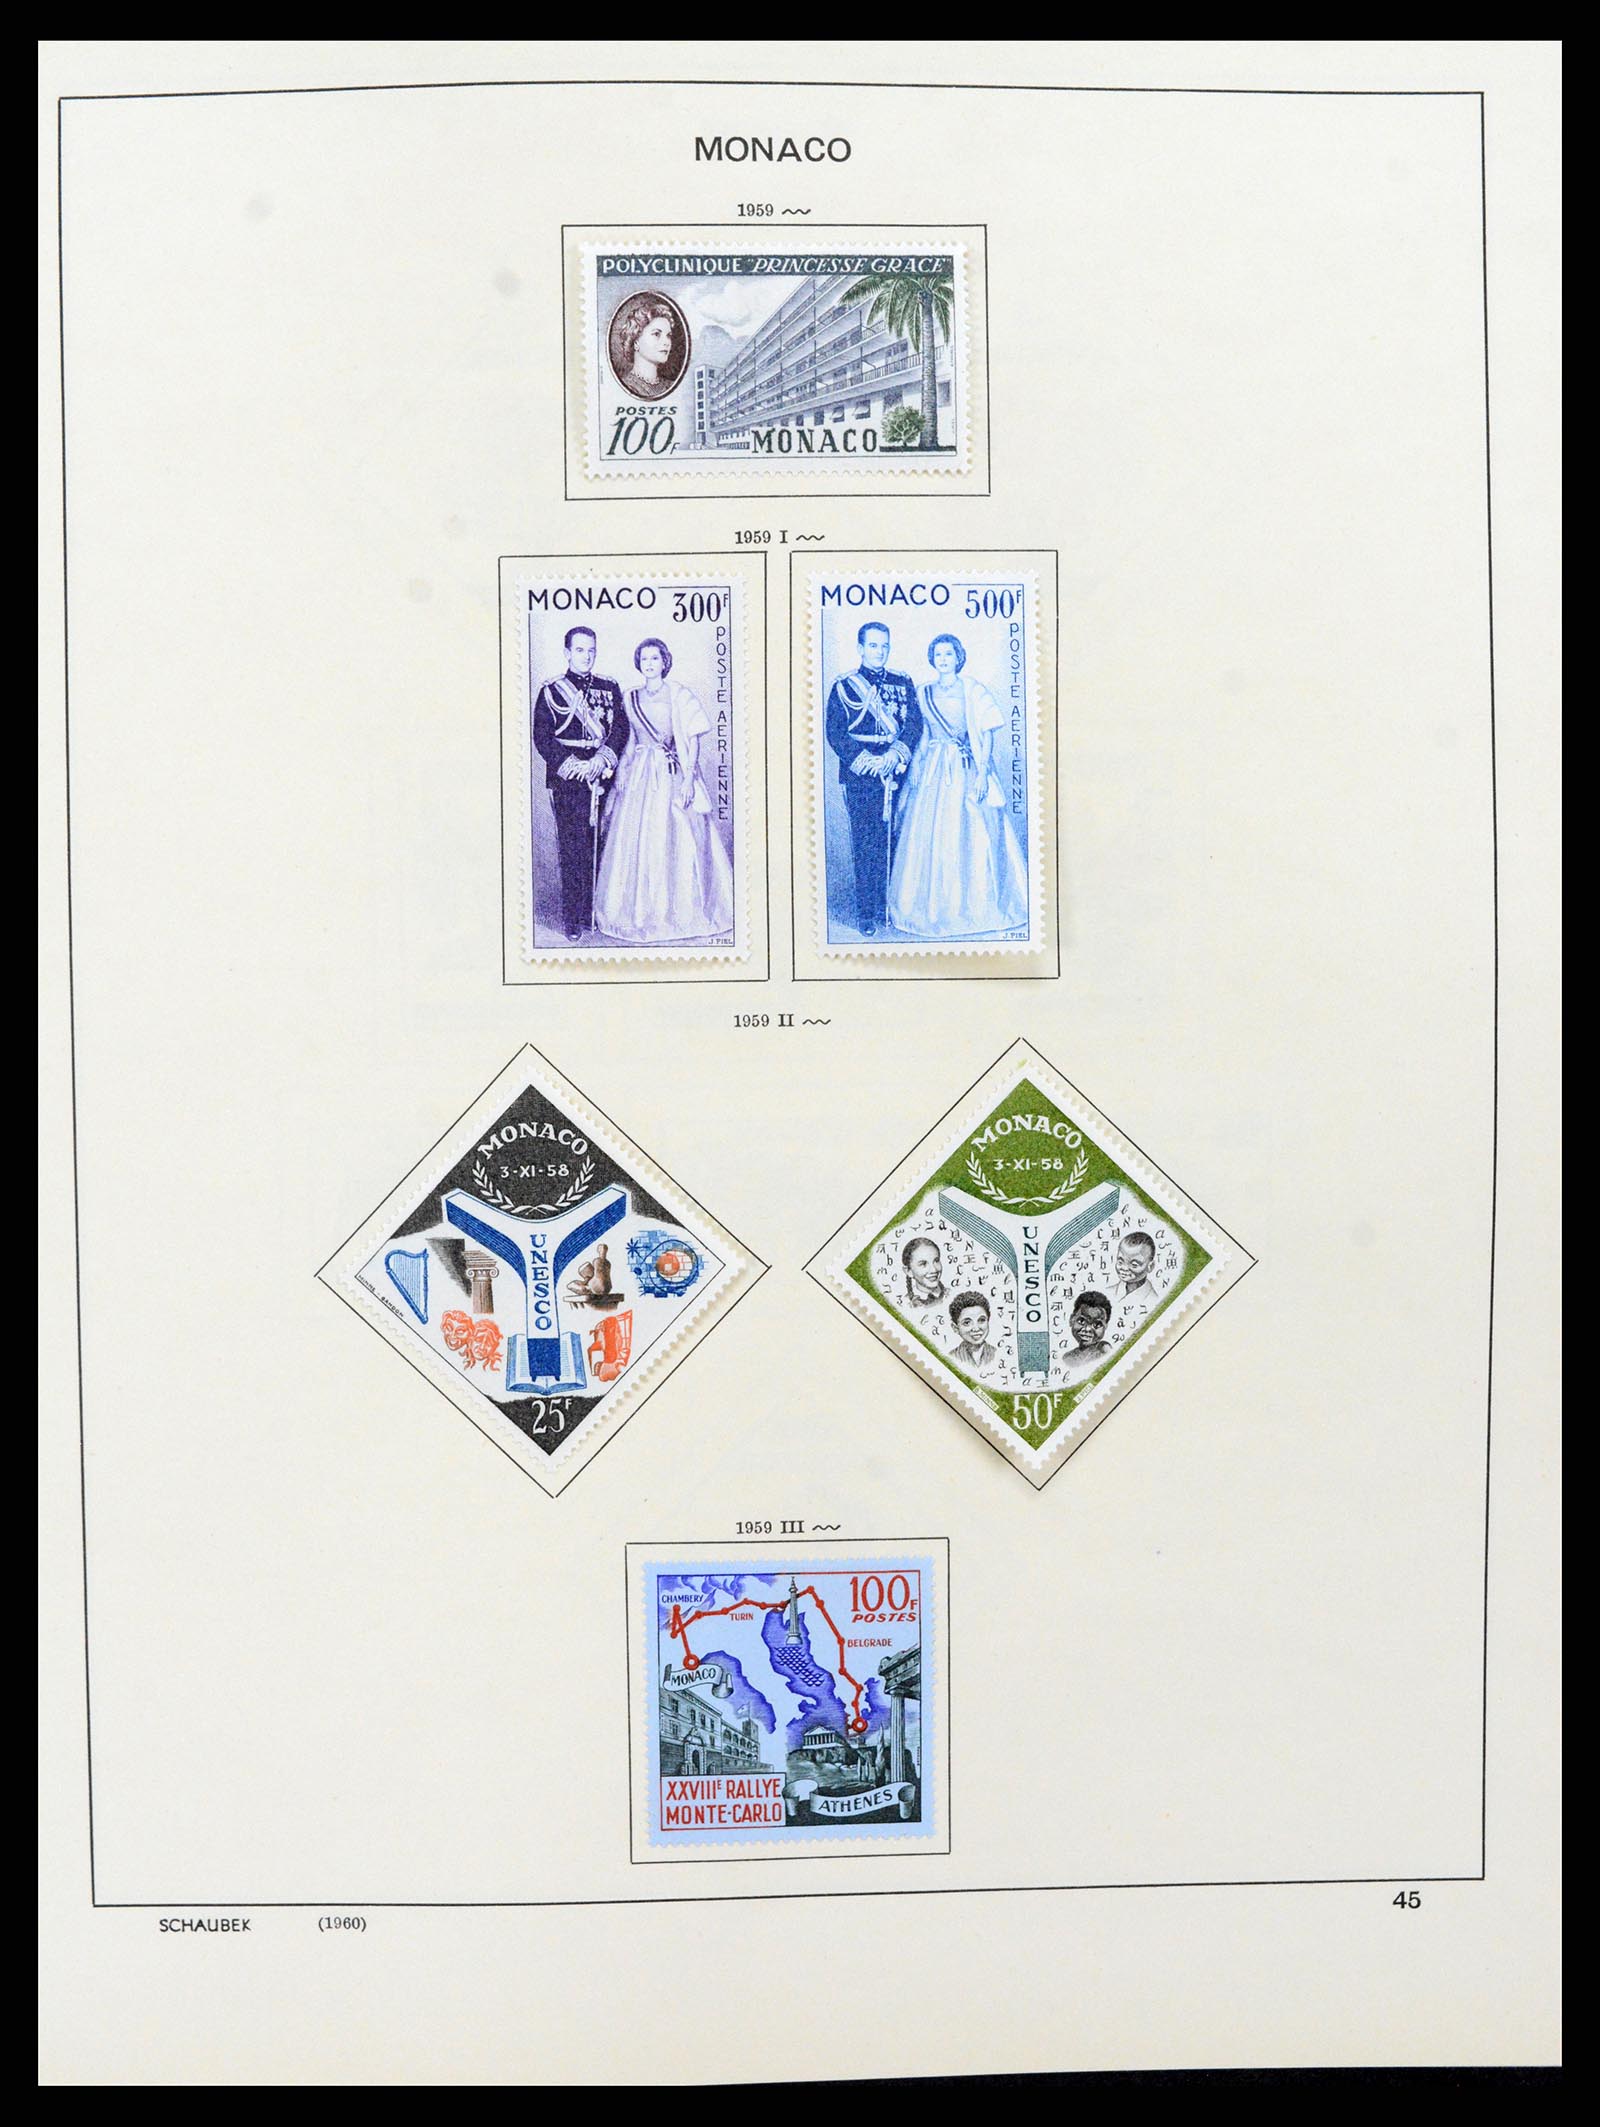 37570 052 - Stamp collection 37570 Monaco 1885-2013.